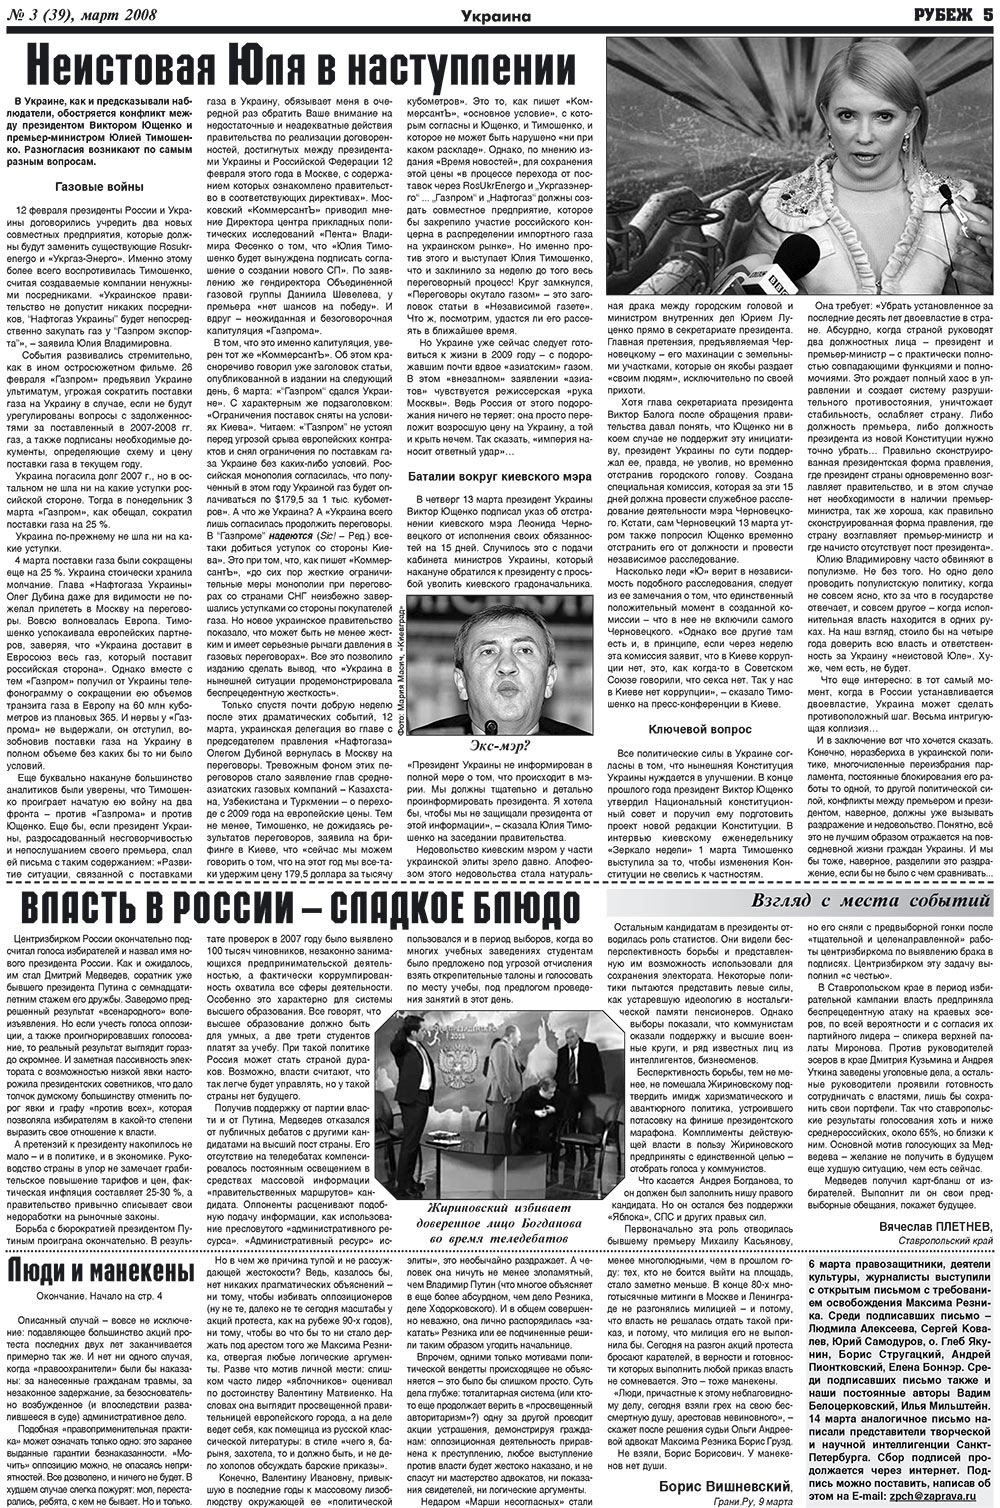 Рубеж, газета. 2008 №3 стр.5